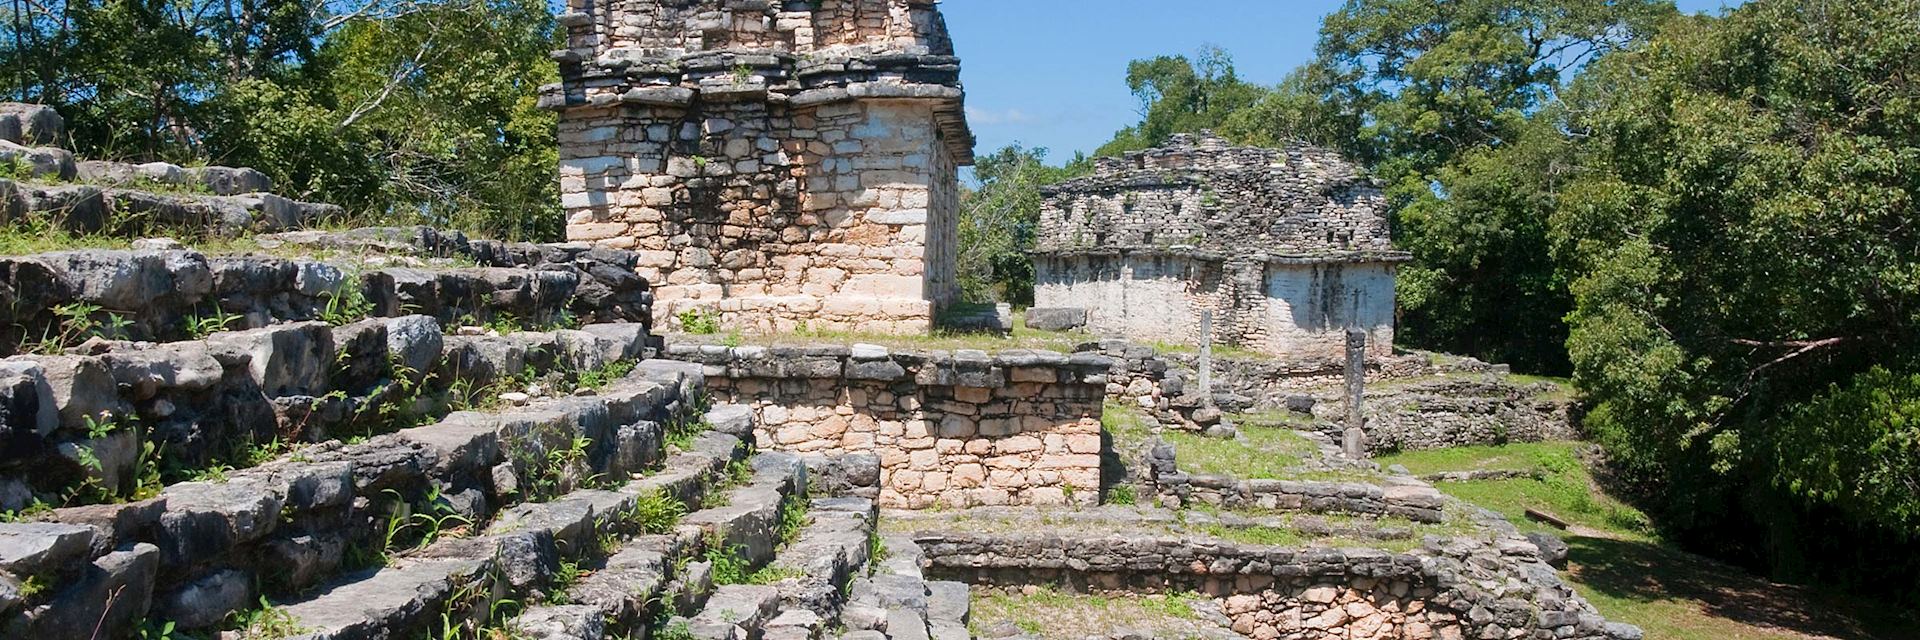 Yaxchilan ruins